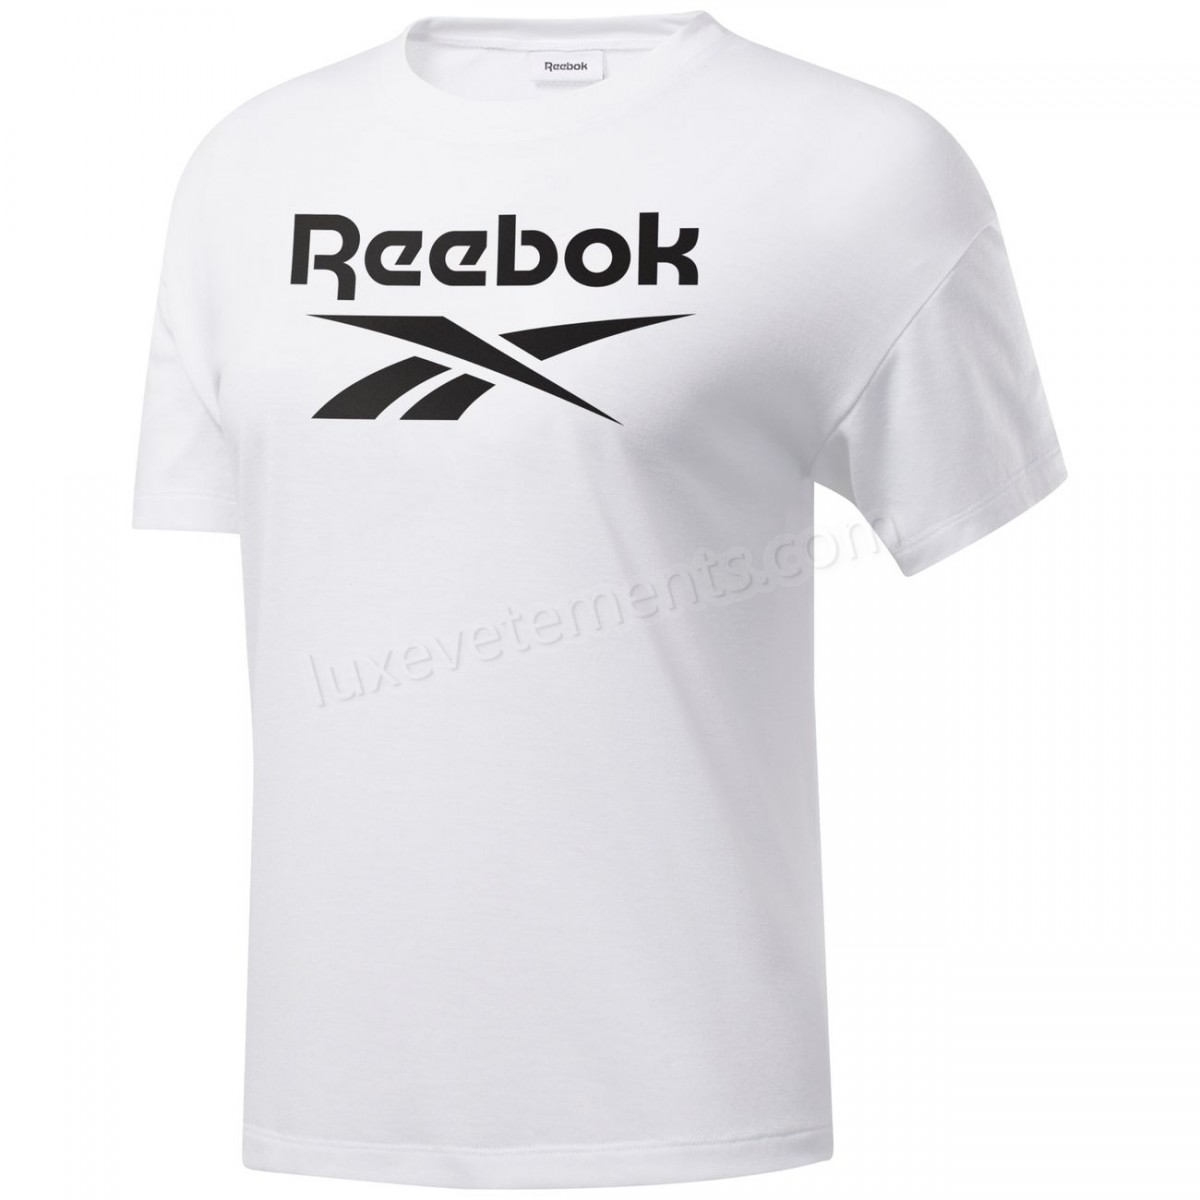 Reebok-Fitness femme REEBOK T-shirt femme Reebok Workout Ready Supremium Logo Vente en ligne - -0